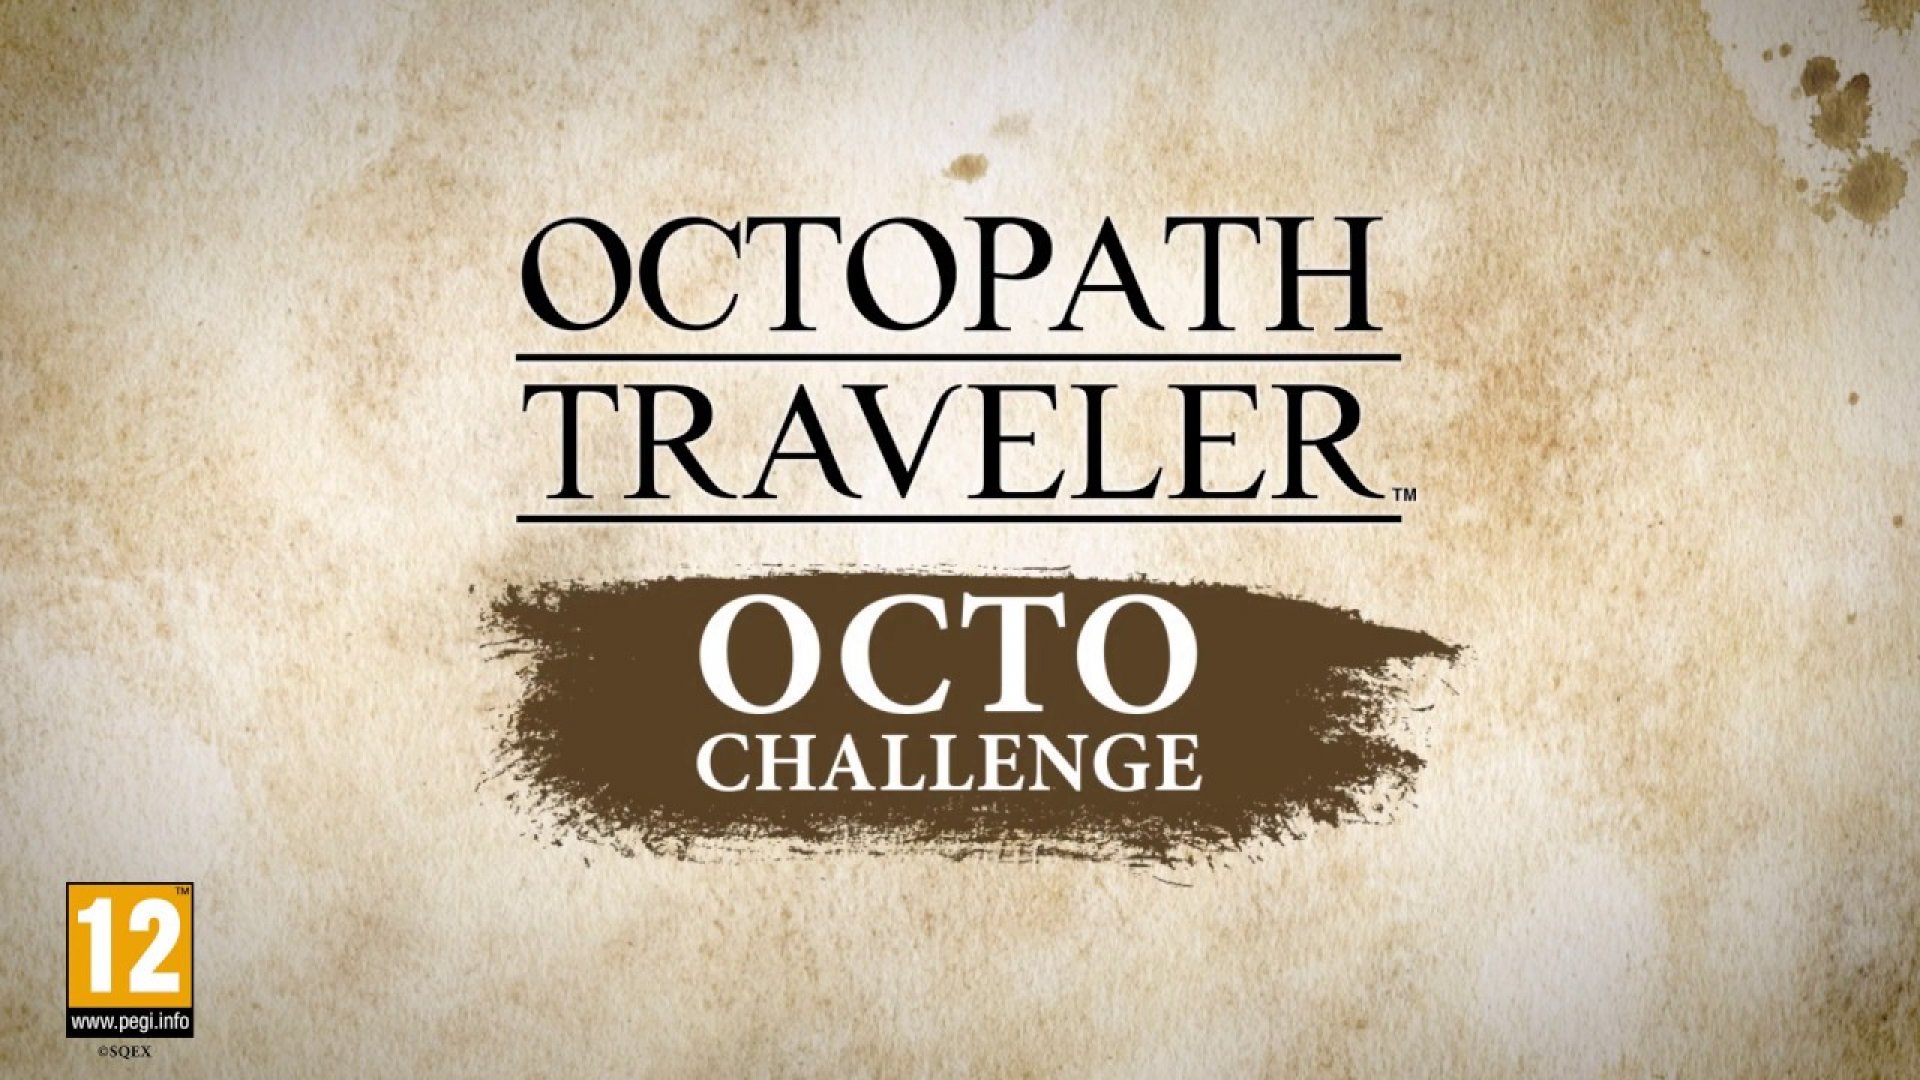 Octopath traveler™ (2019). Octopath traveler™. Challenge yourself. Octopath traveler Wallpaper. Travel challenge